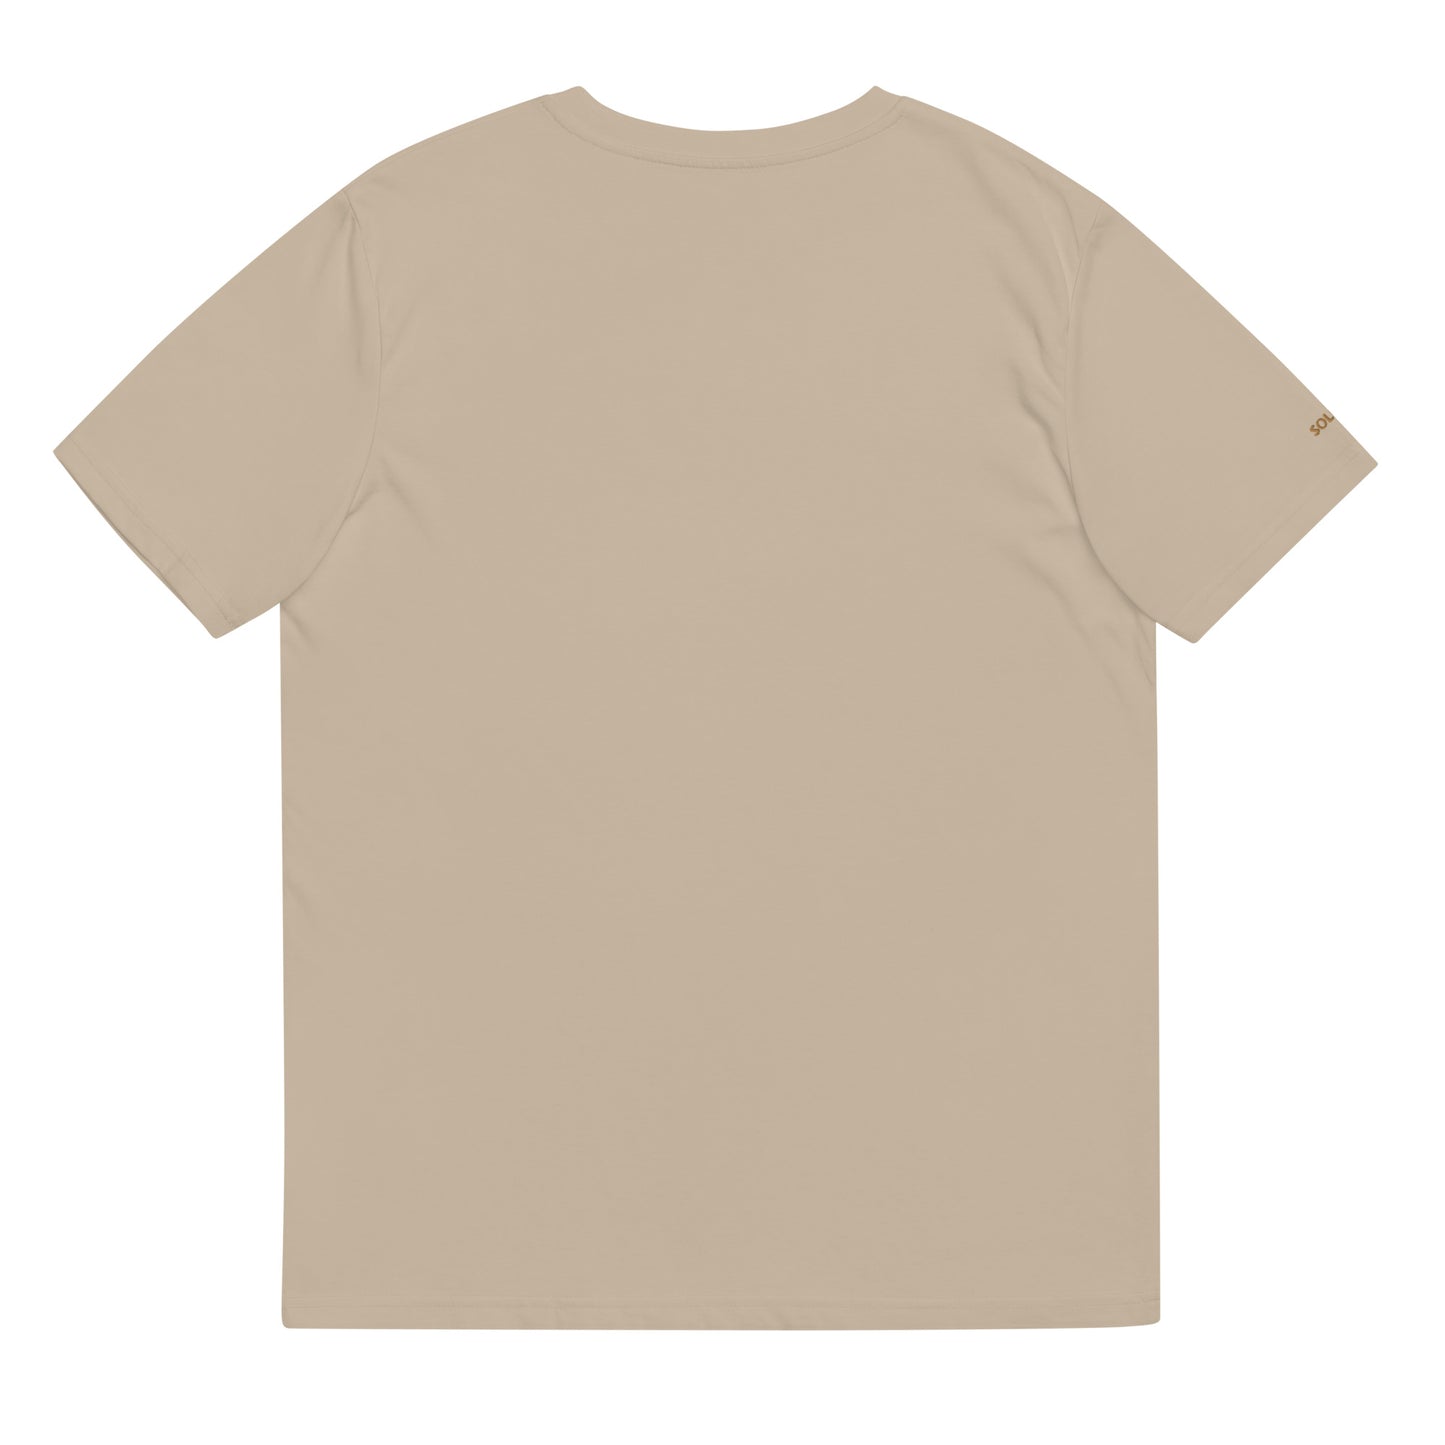 Sand Plain - Premium Unisex Organic Cotton T-shirt